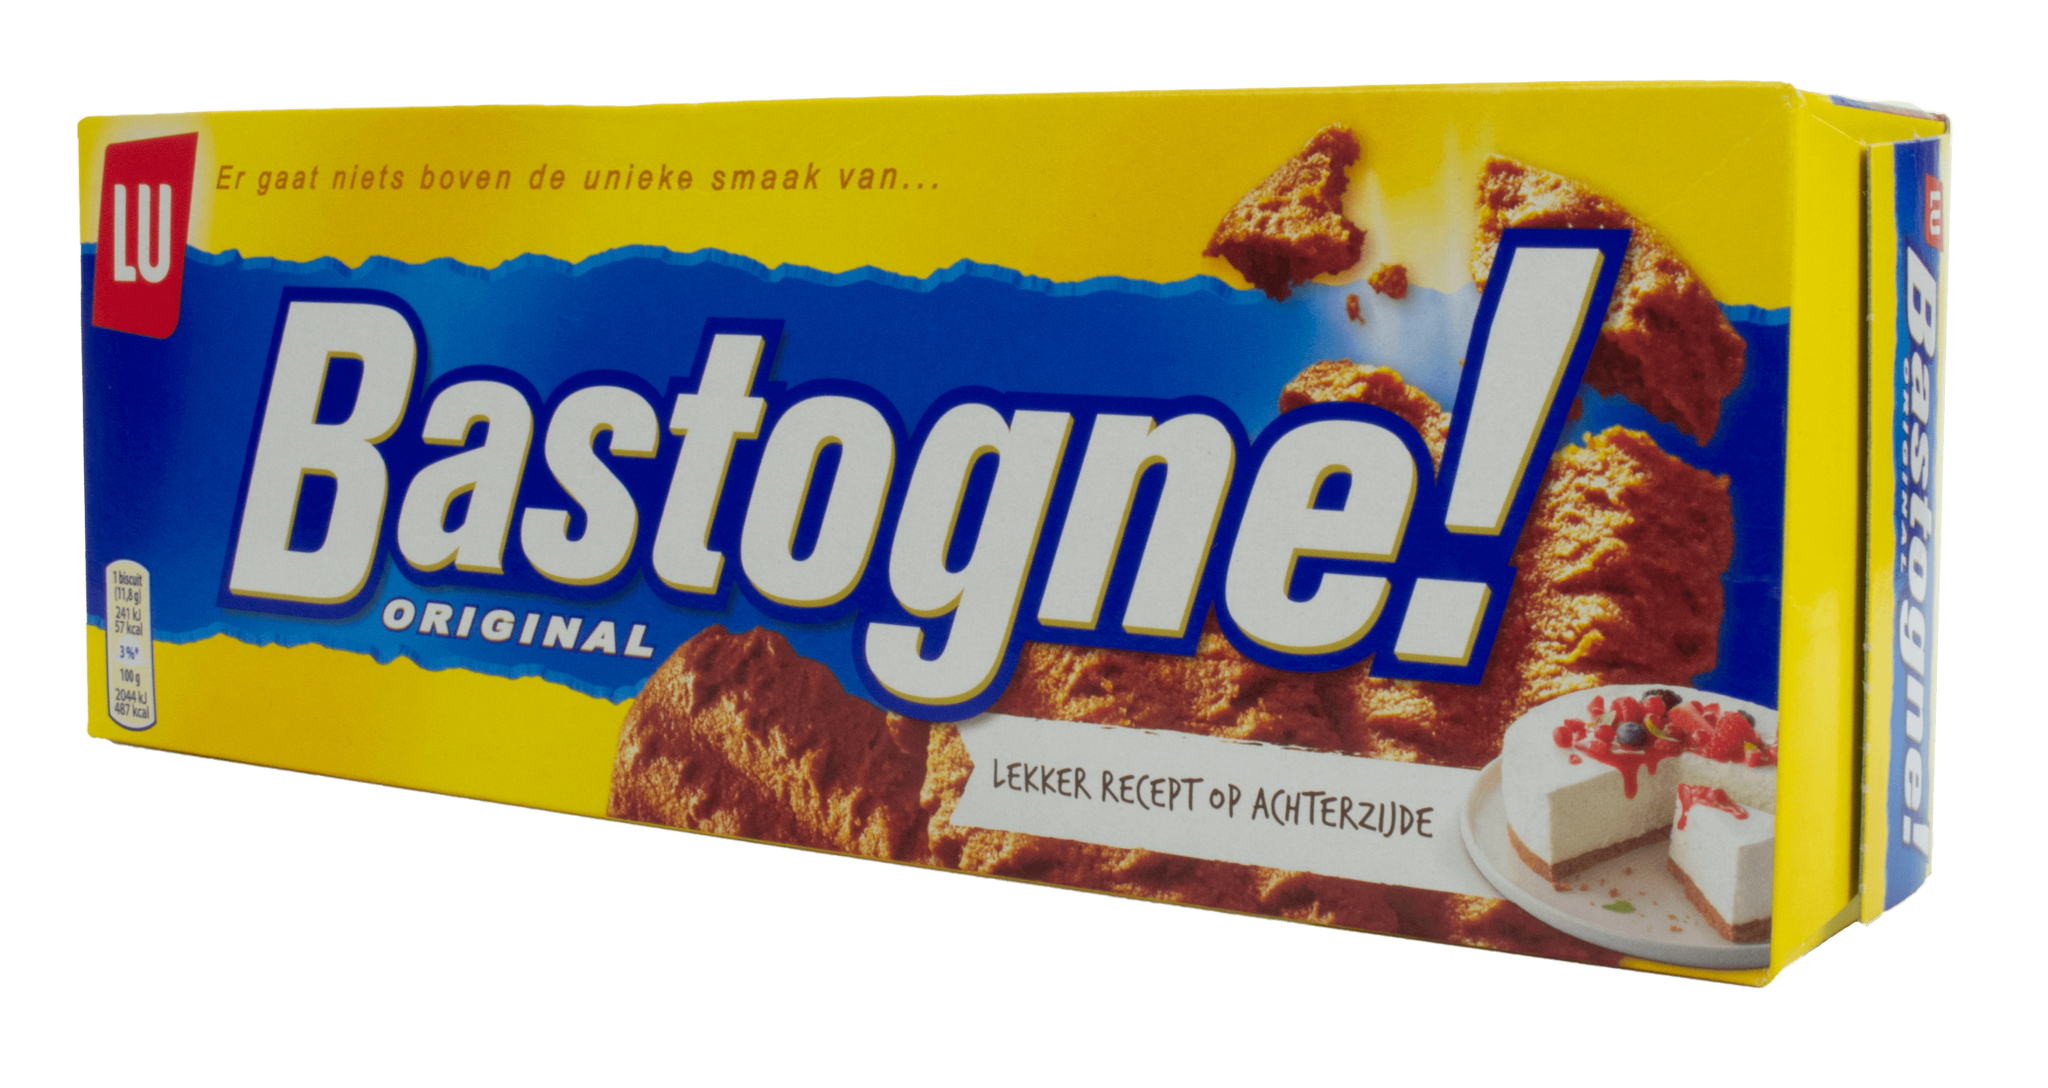 Biscuits LU Bastogne